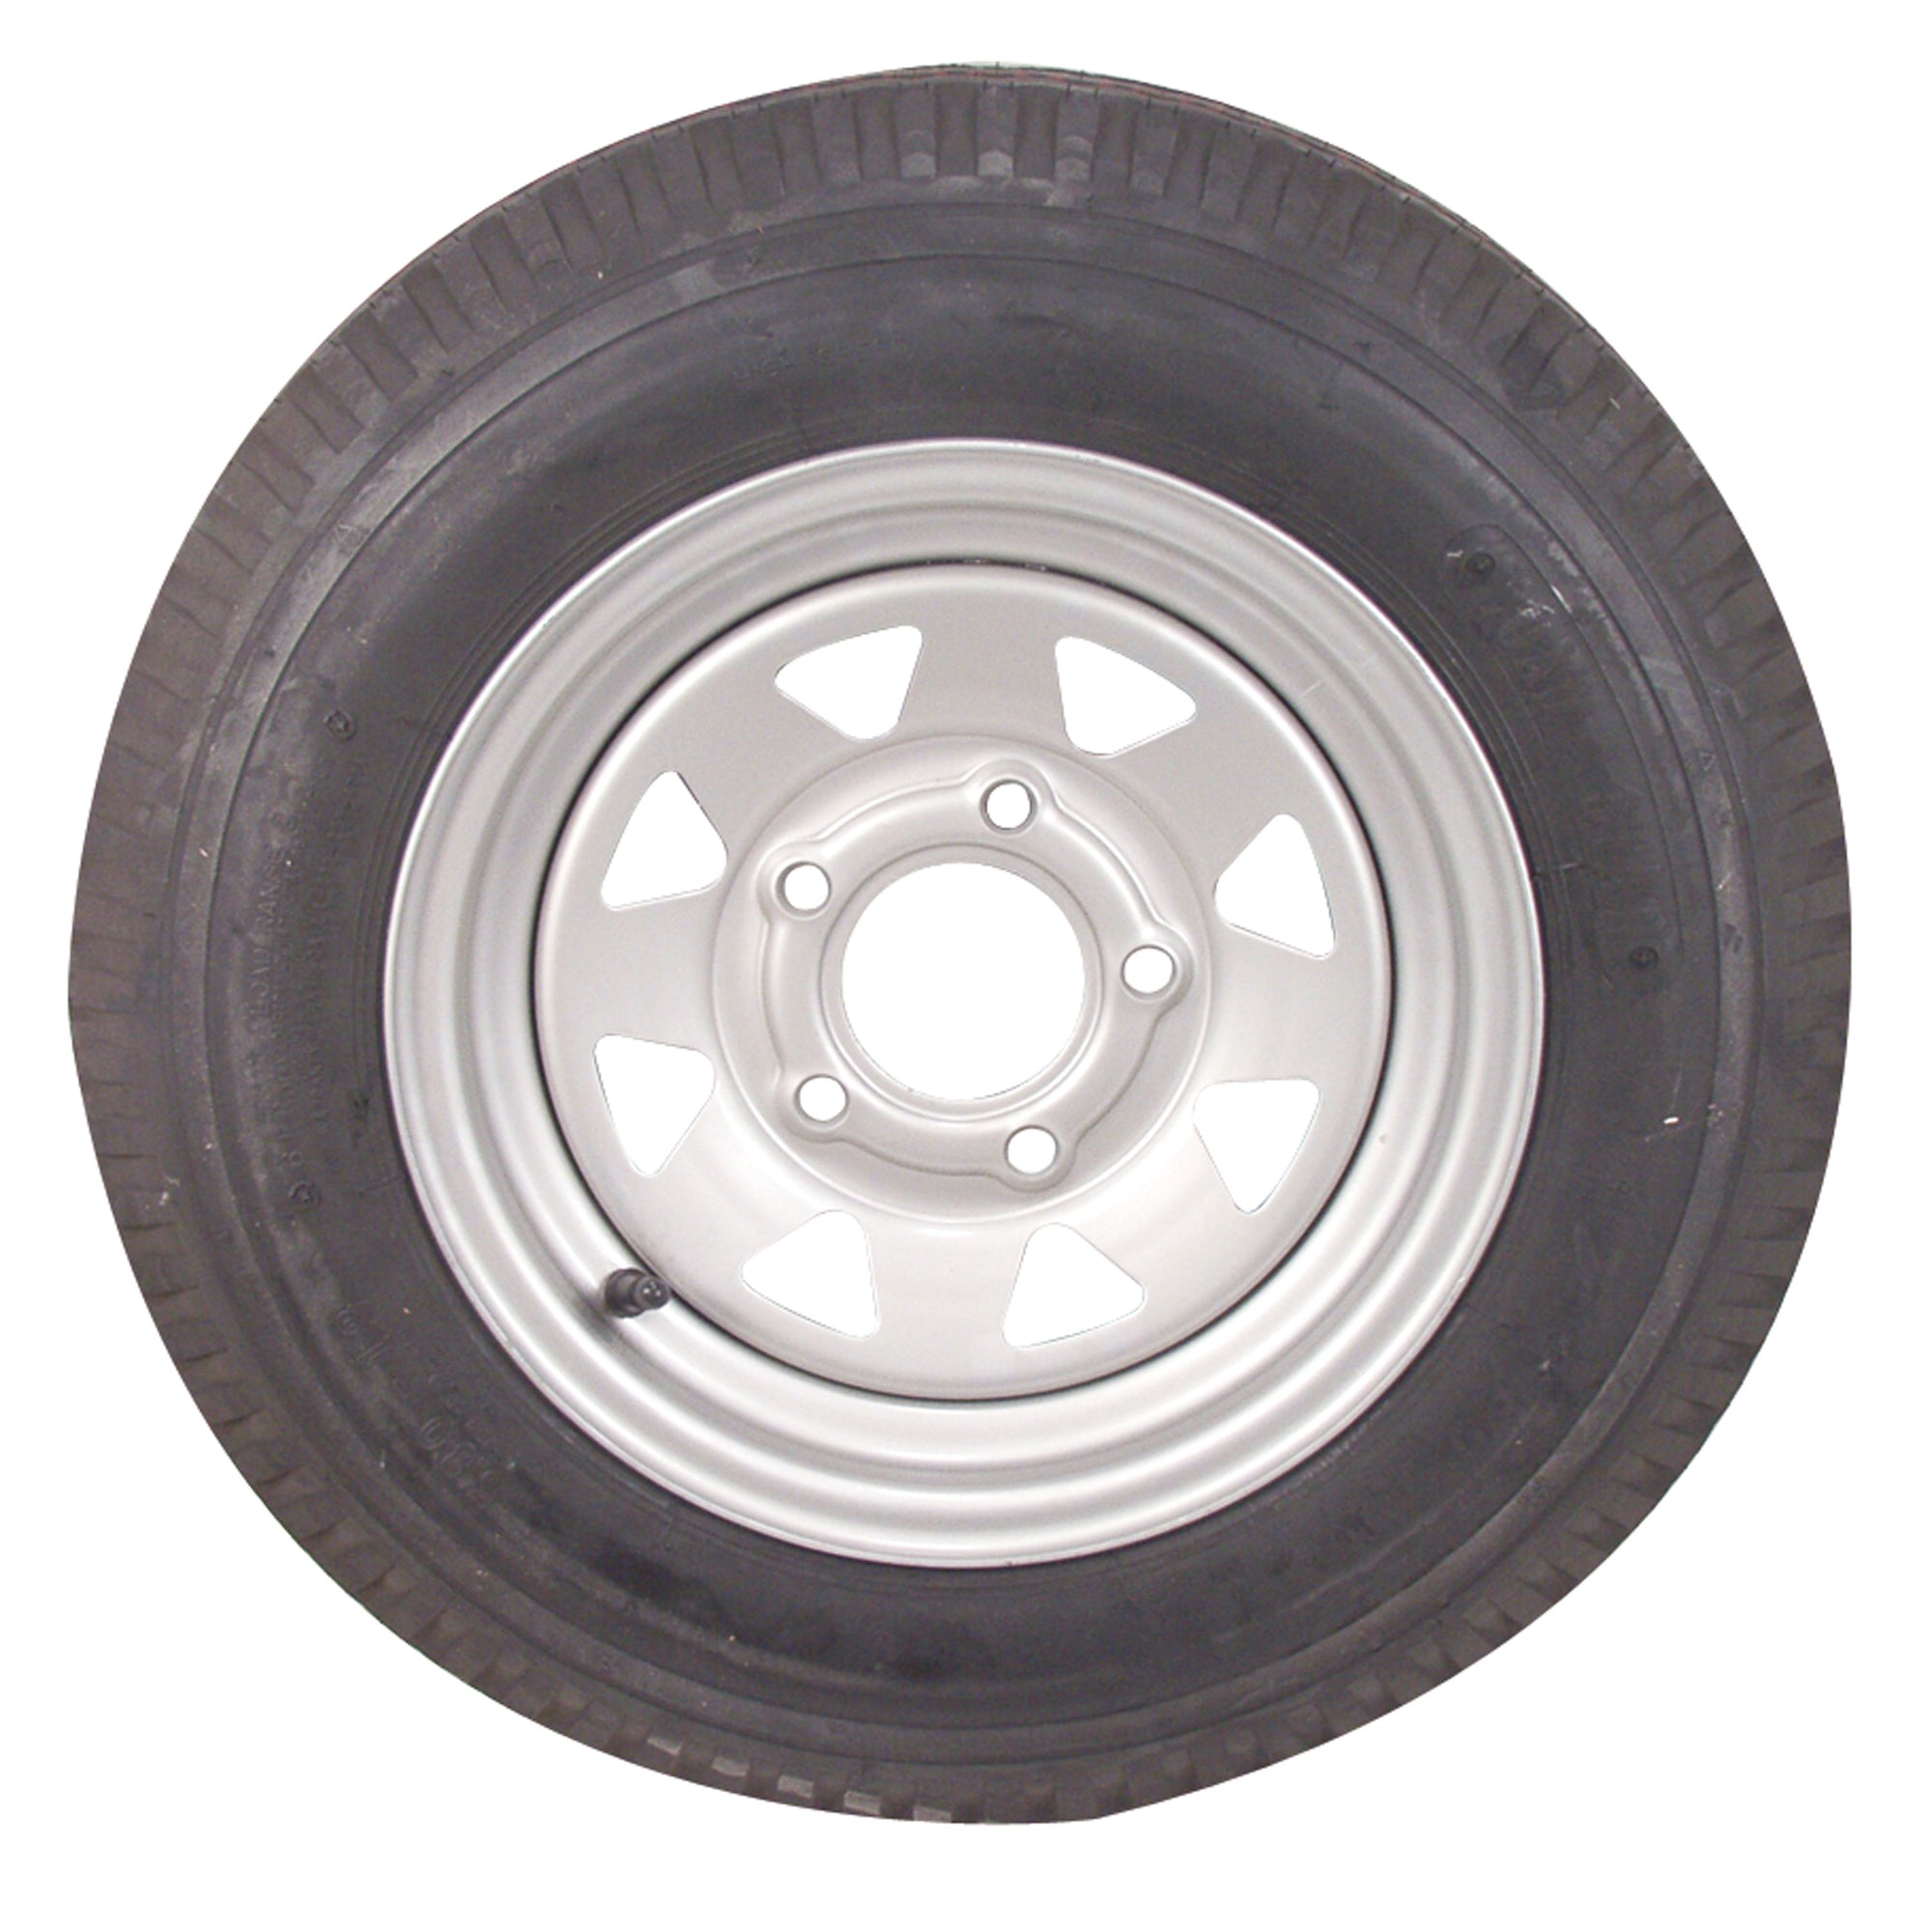 Americana Tire and Wheel 31242 Economy Bias Tire and Wheel ST175/80D13 D/5-Hole - Galvanized Spoke Rim